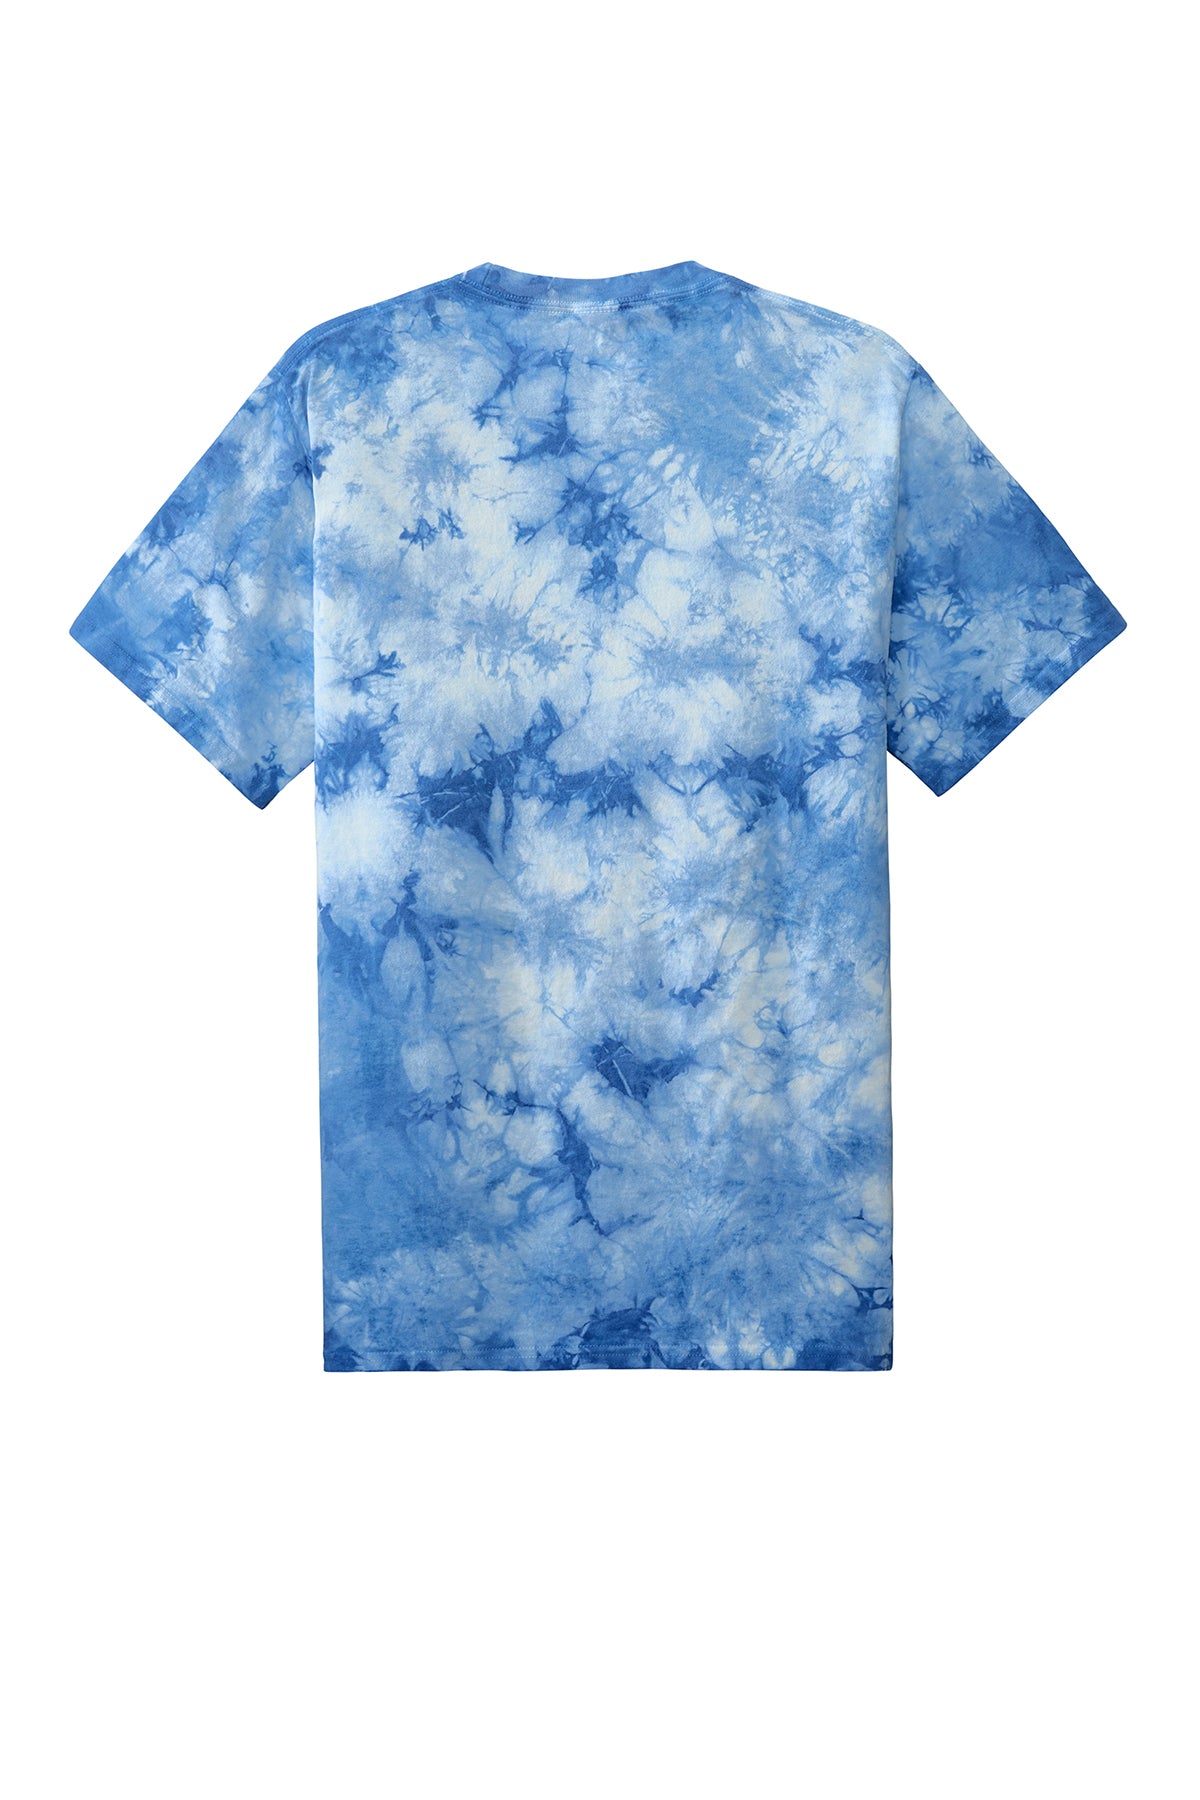 Port & Company ® Crystal Tie-Dye Tee Sky Blue